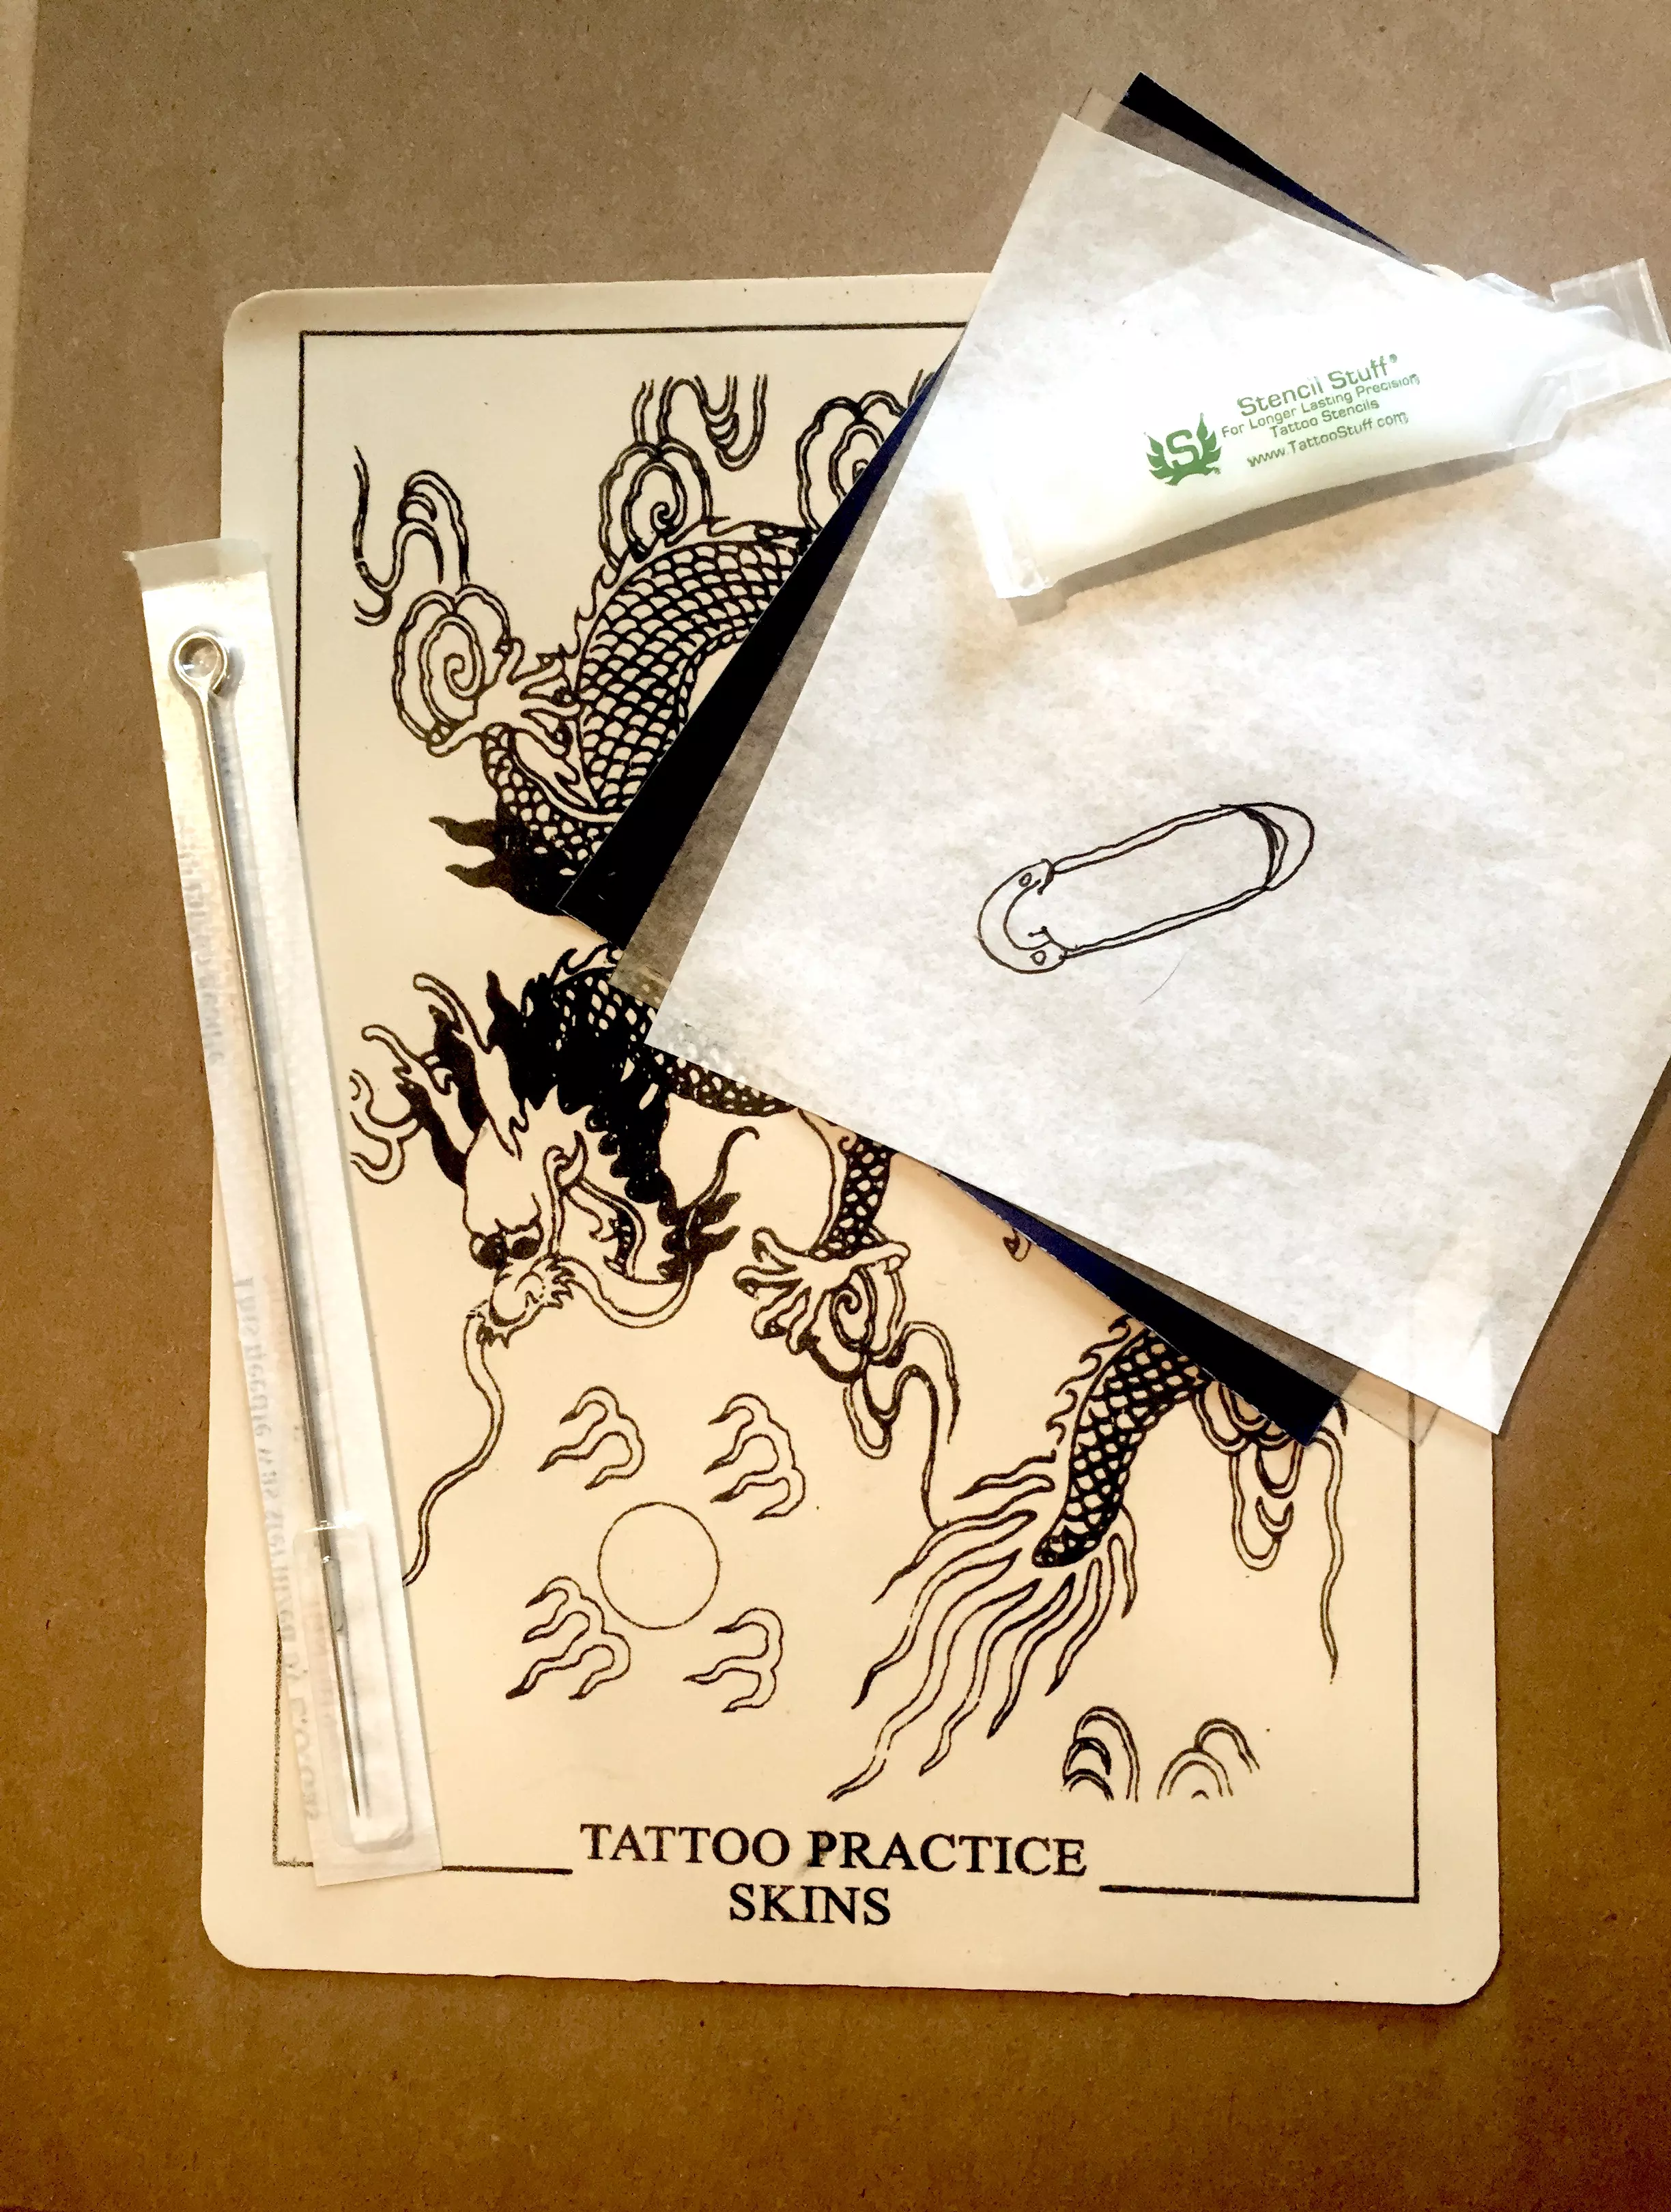 Stencil Stuff Professional Tattoo Stencil Transfer 8 Ounce Free Shipping